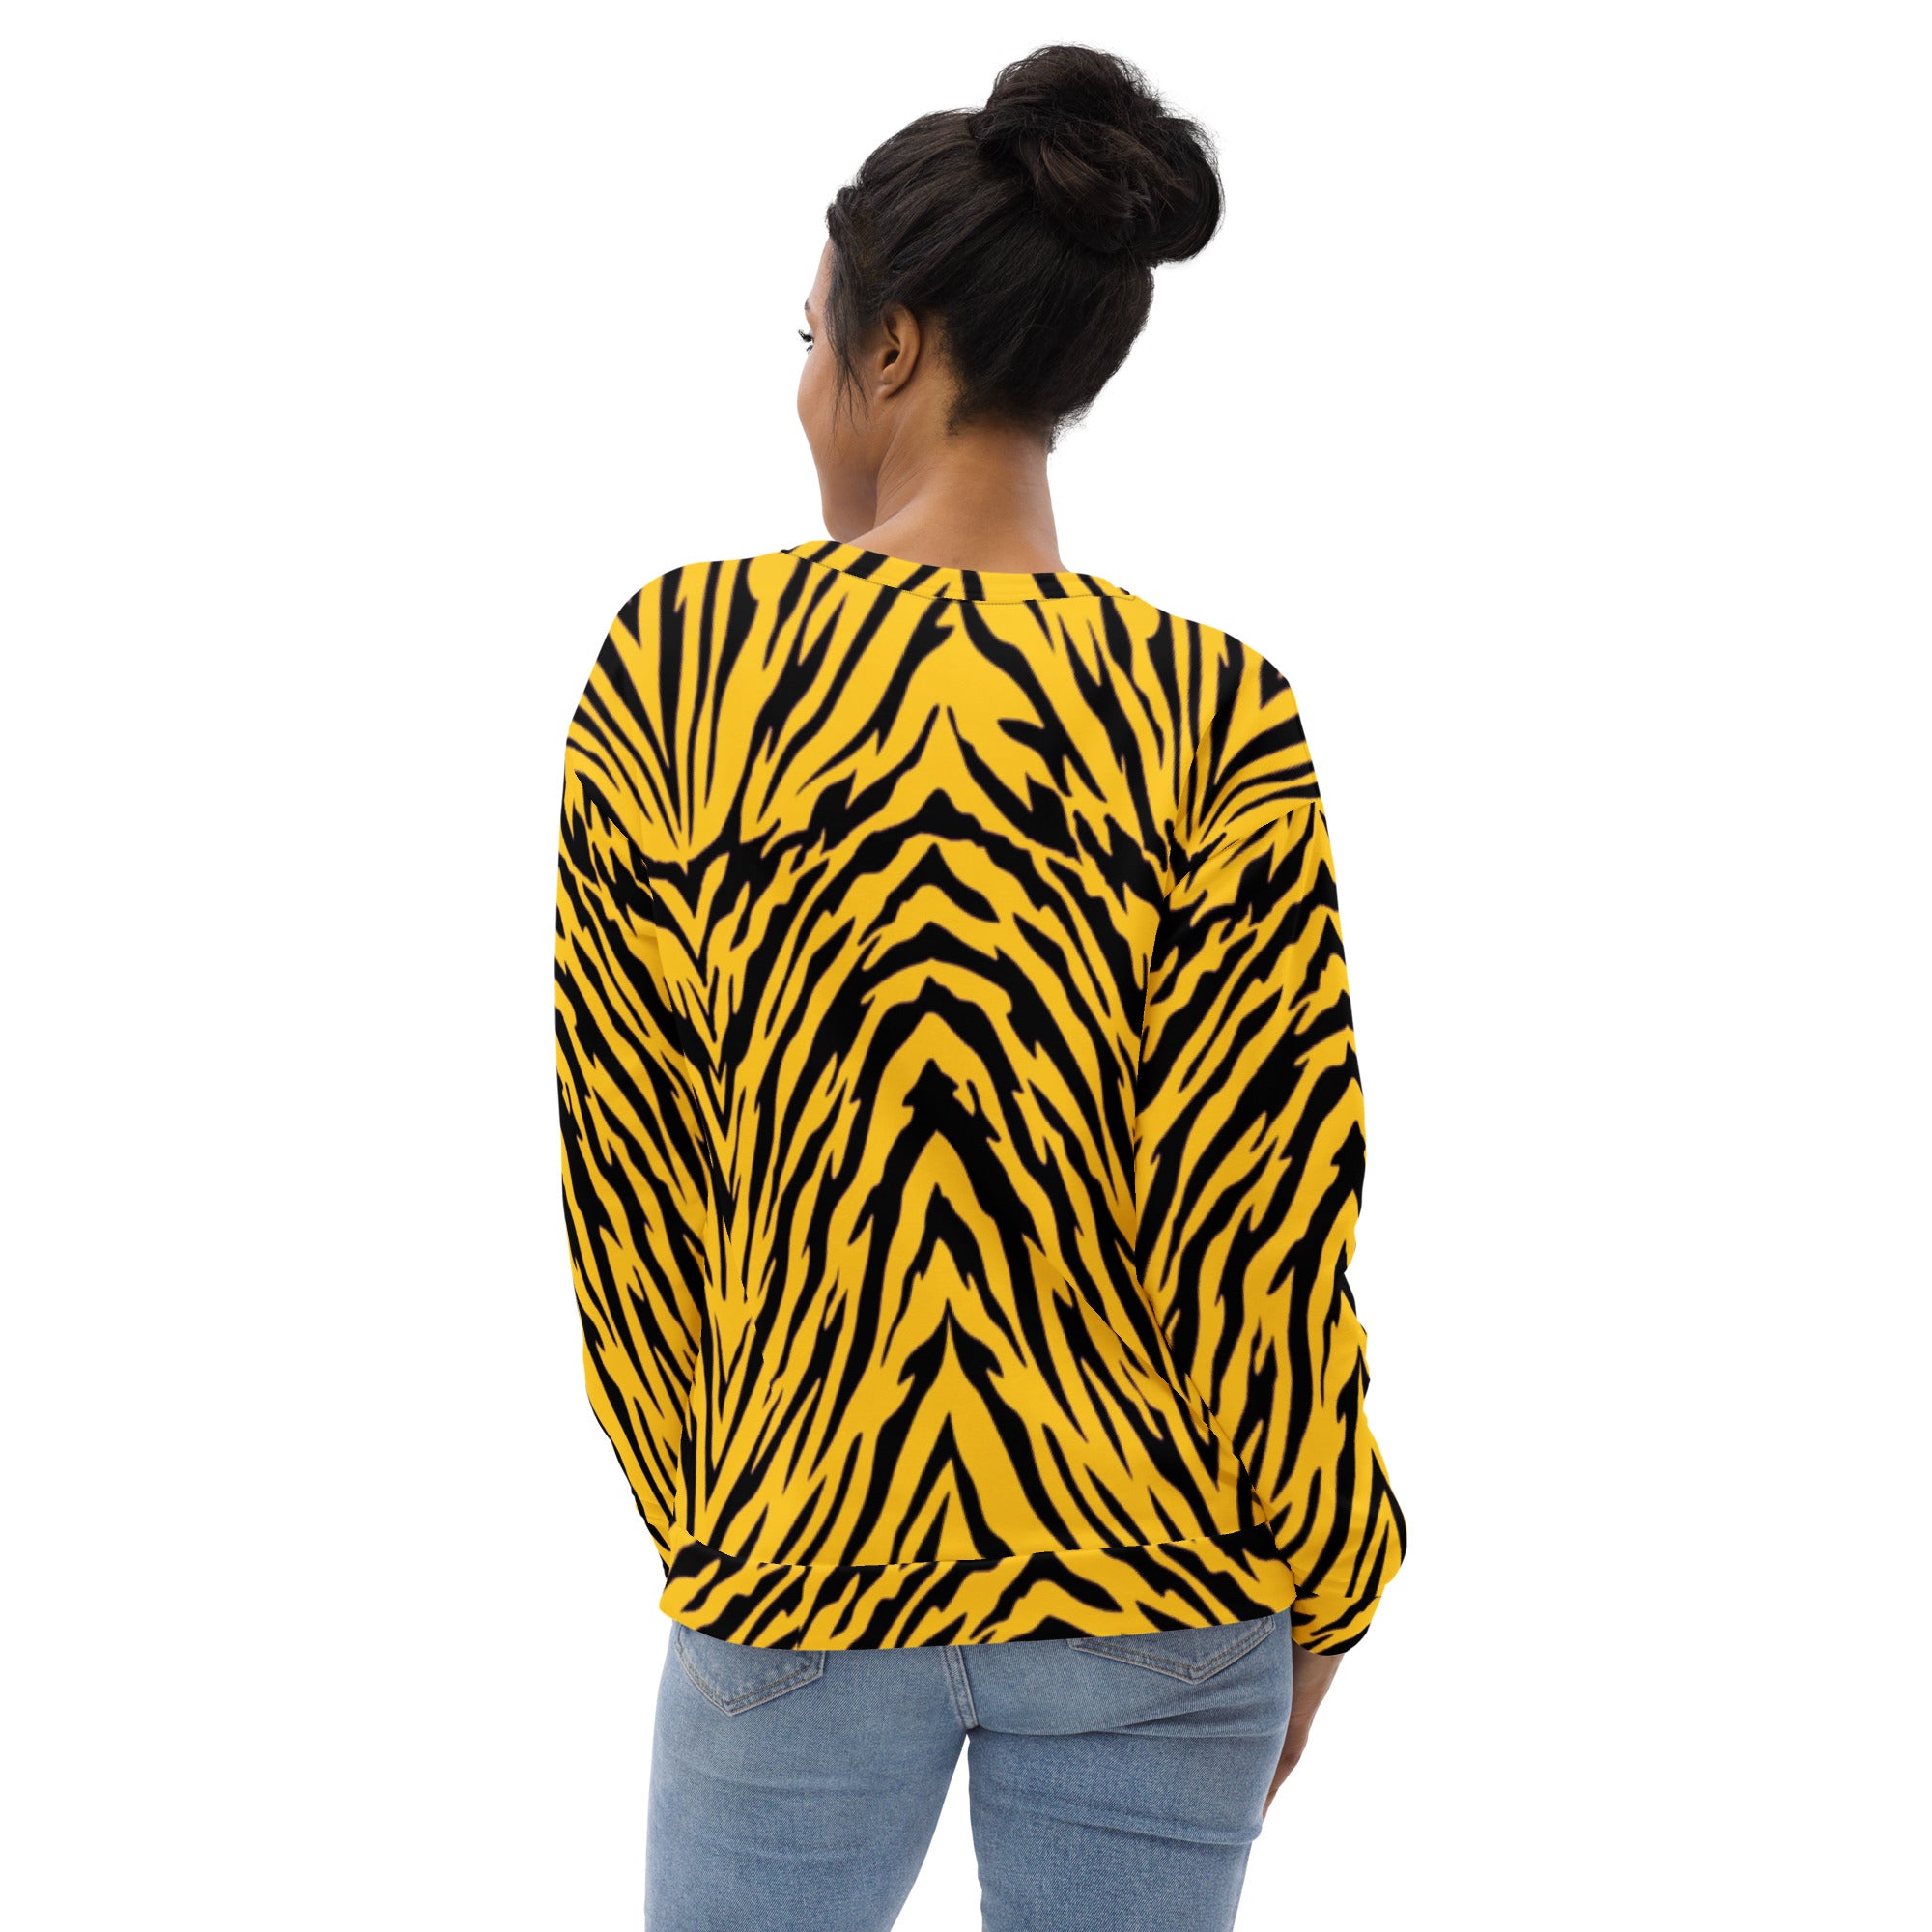 Black and Gold Tiger Stripes Unisex Sweatshirt